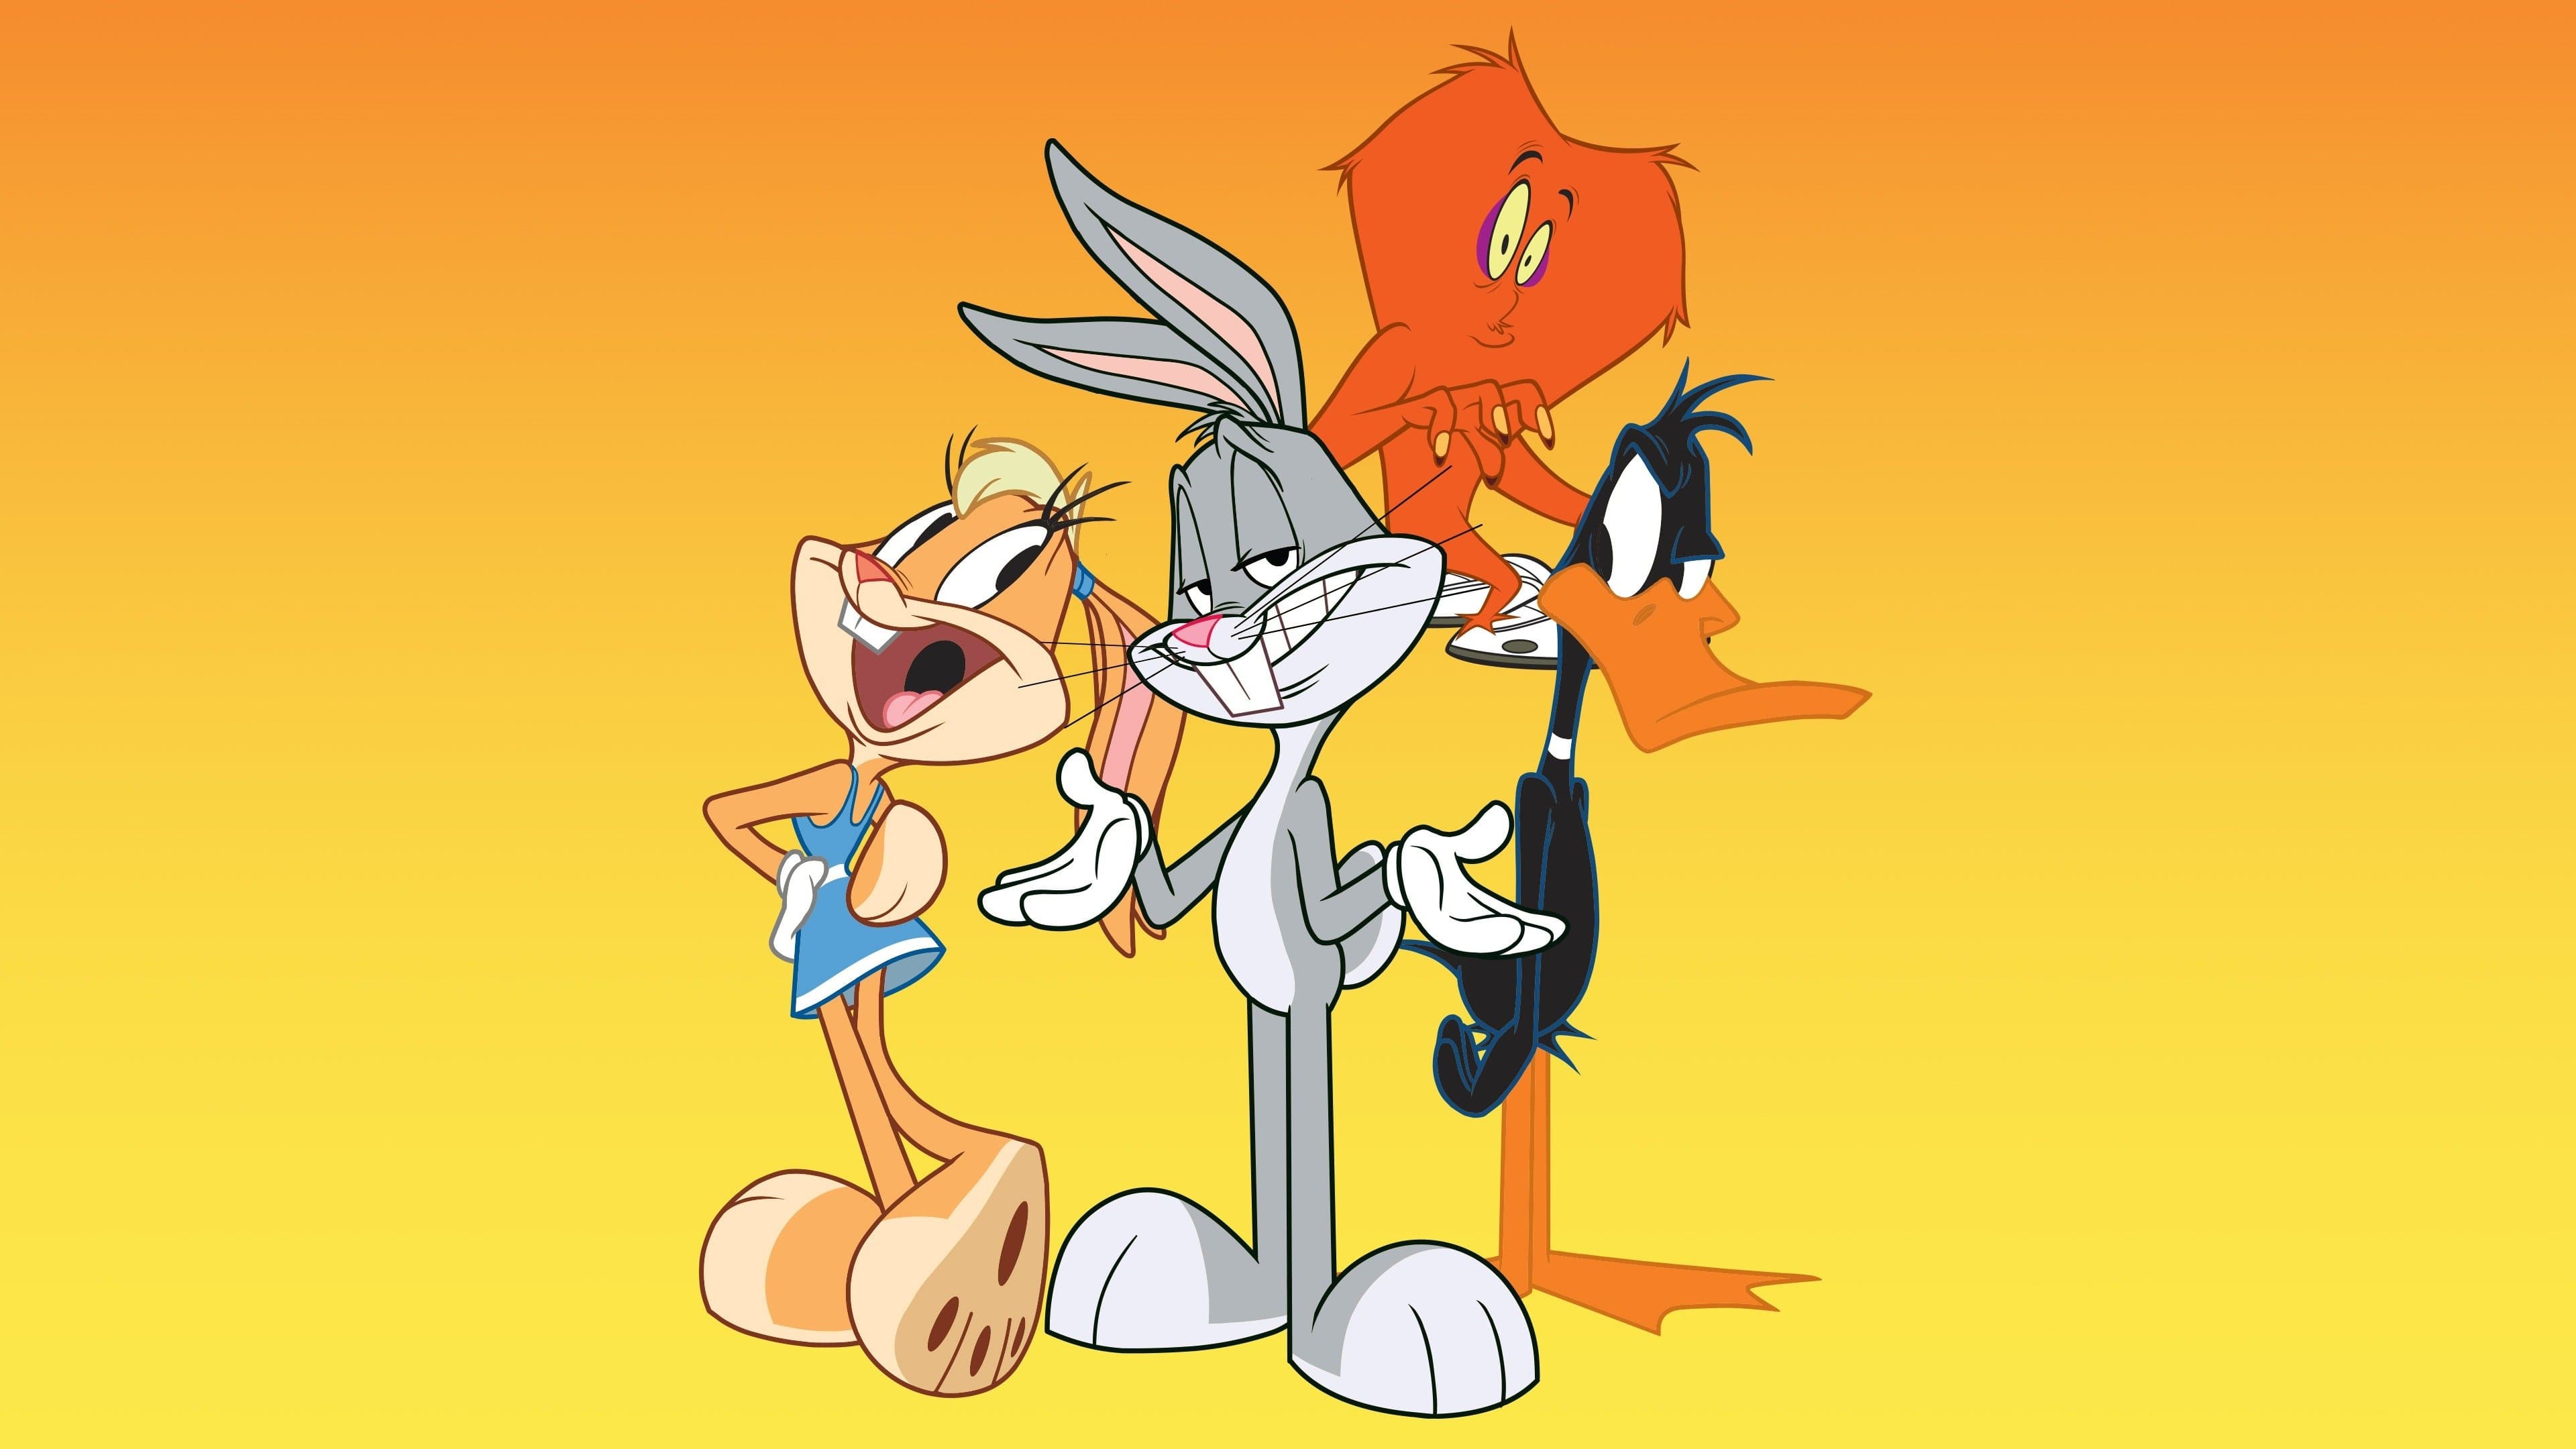 The Looney Tunes Show Season 2 (2015)